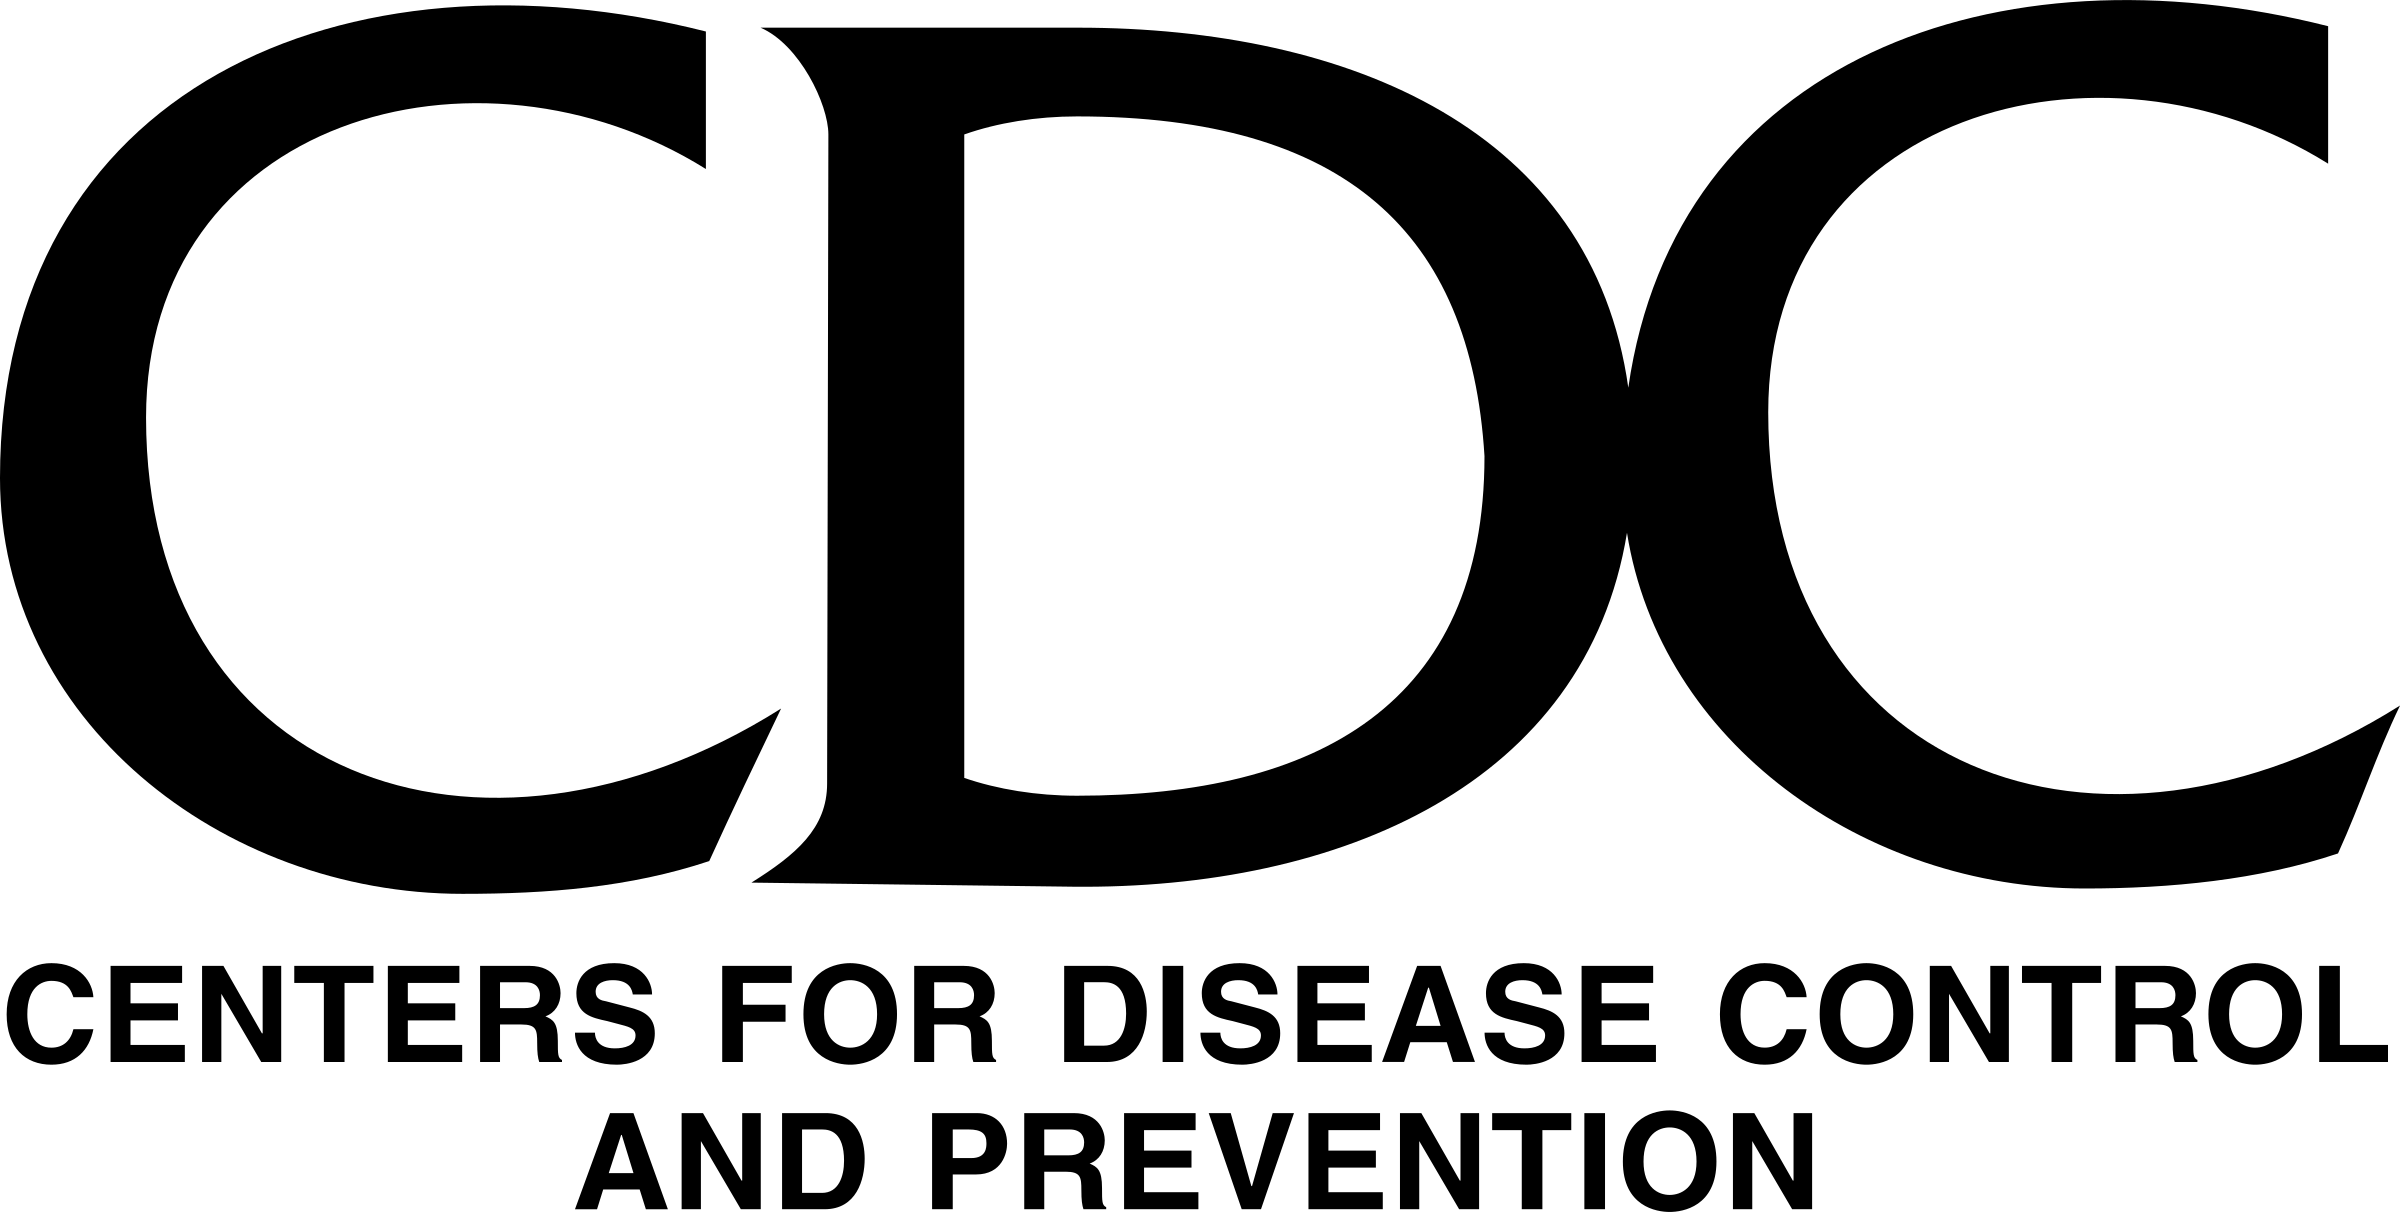 CDC Logo - CDC Logo PNG Transparent & SVG Vector - Freebie Supply